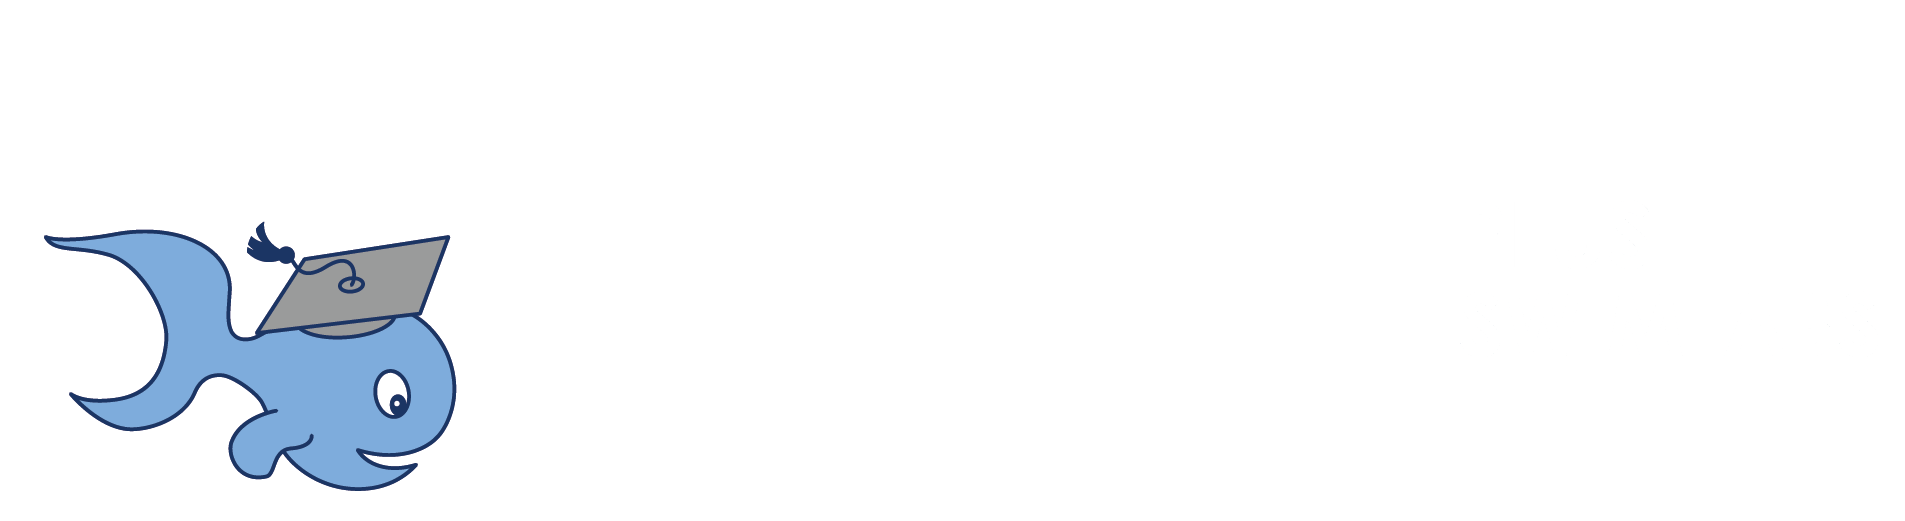 Swimtastic Swim School + SwimLabs logo